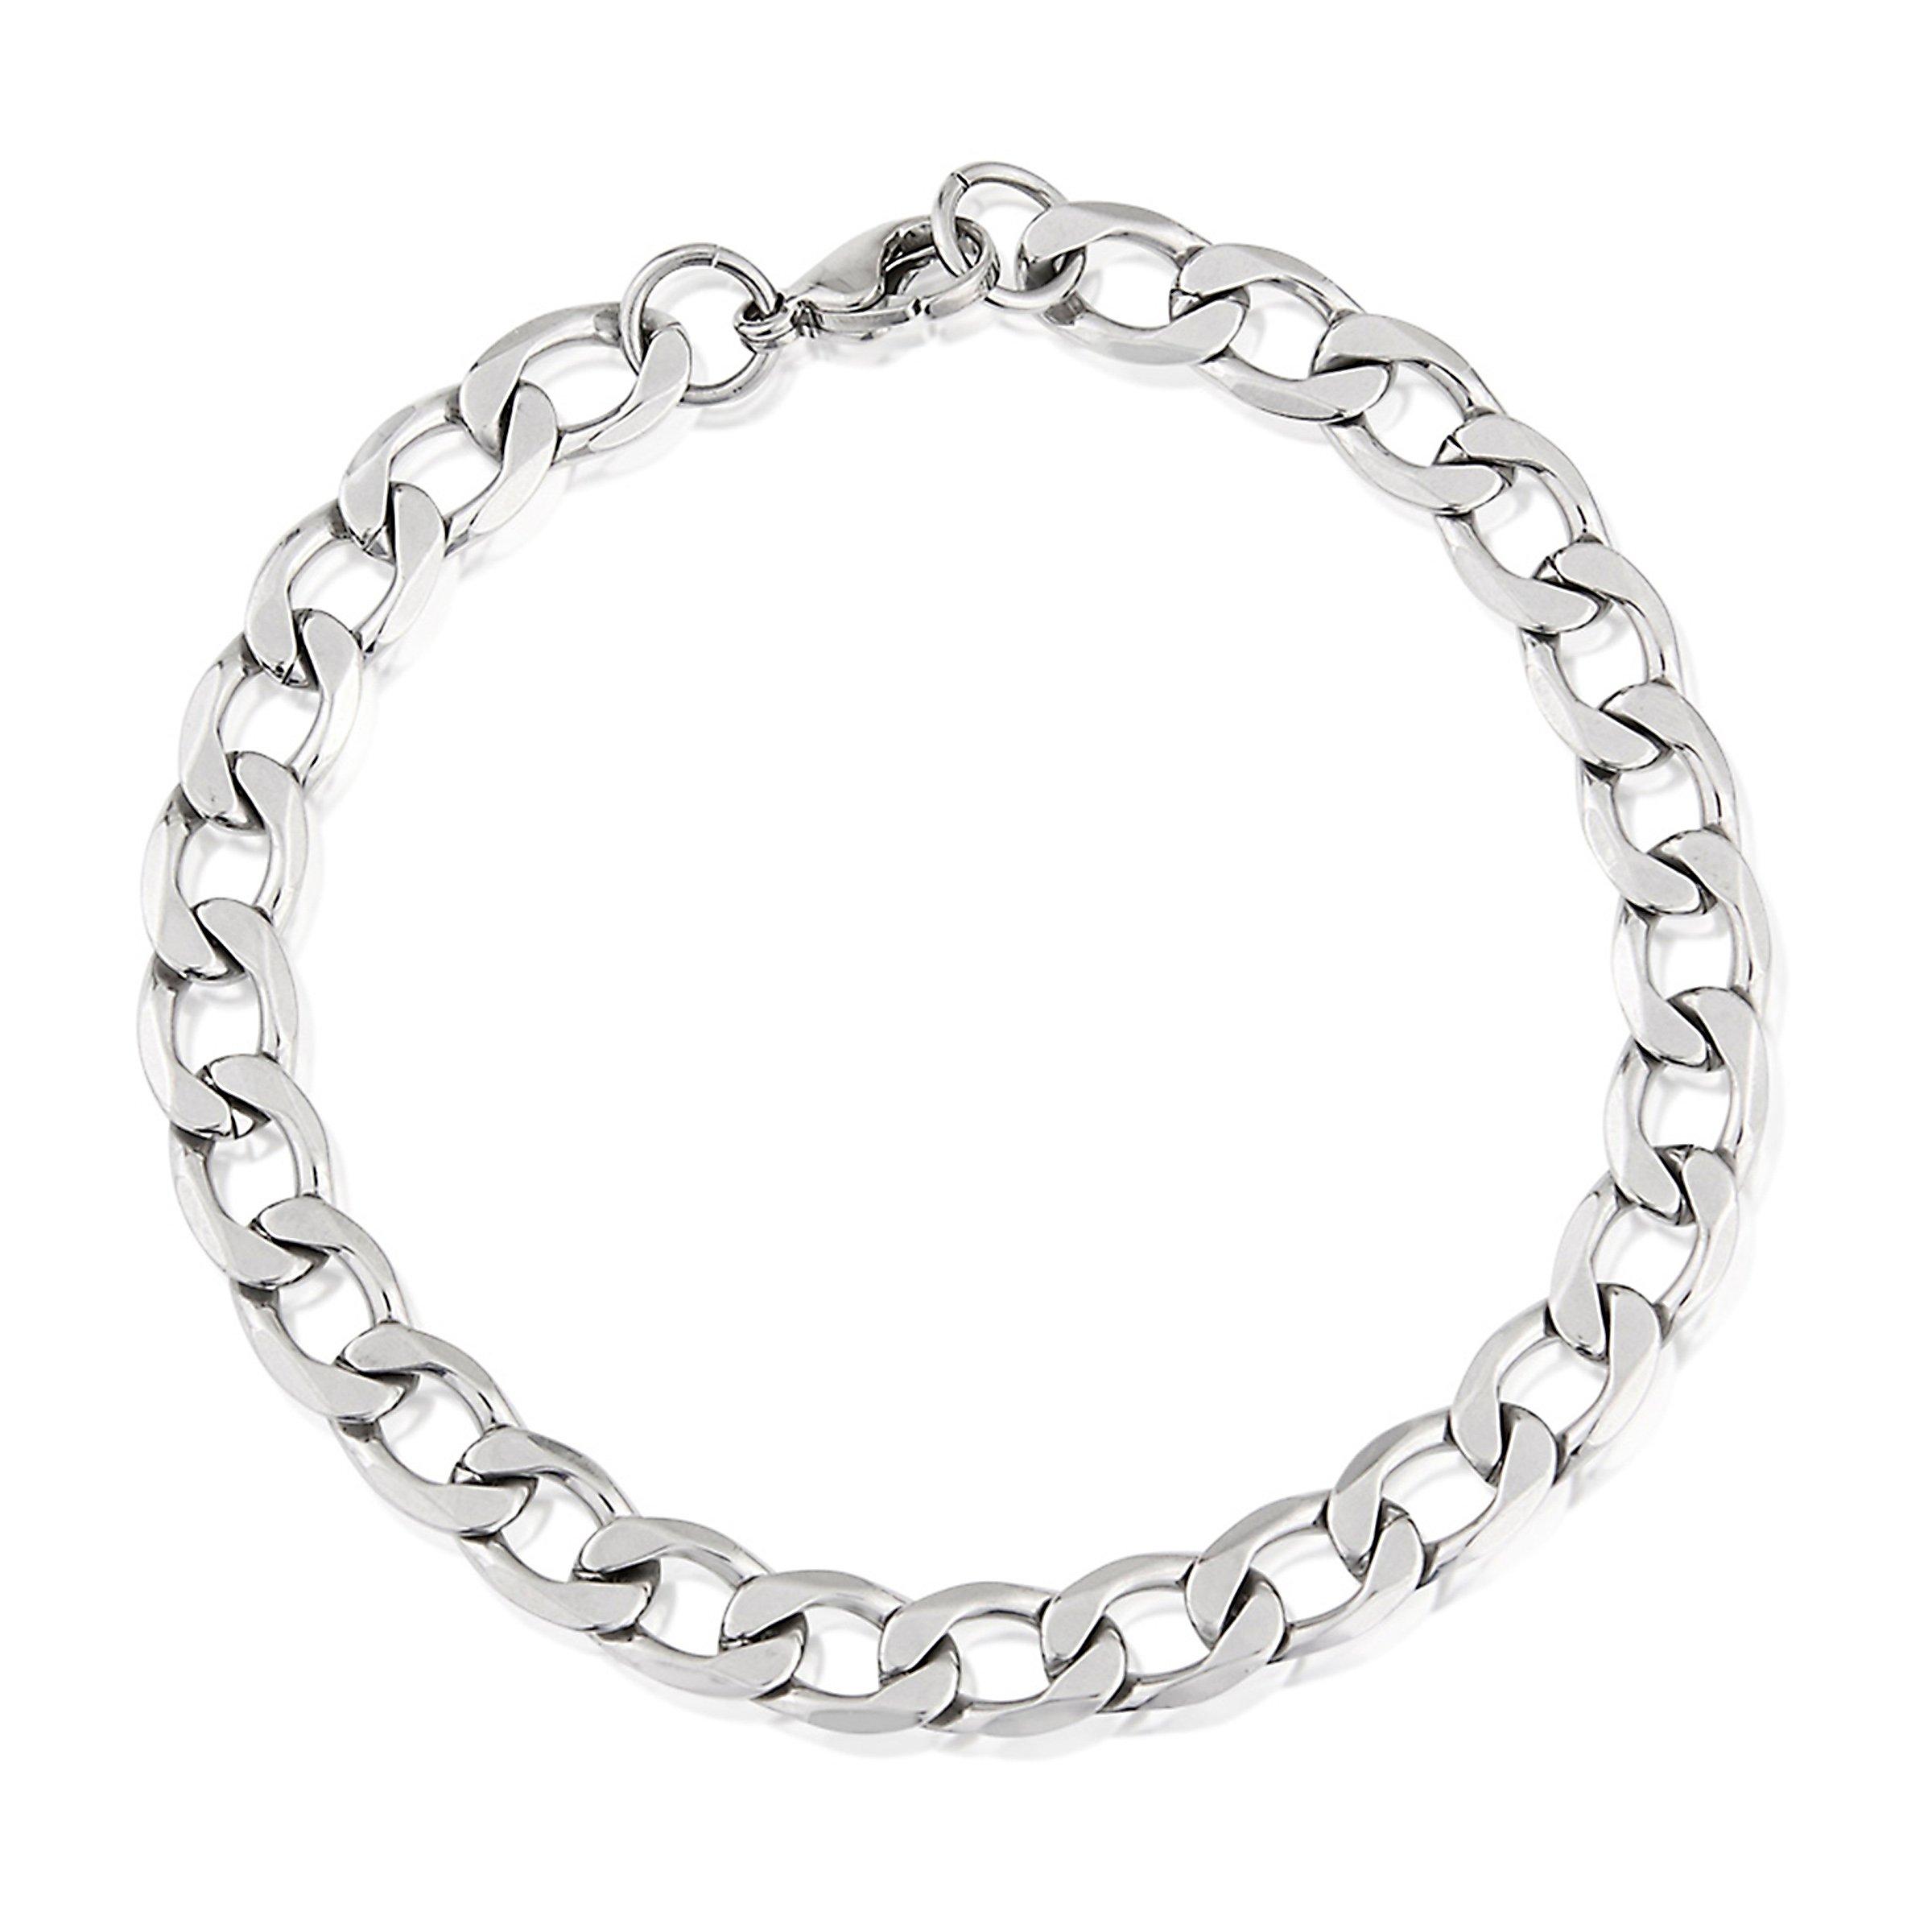 Buy Stainless Steel Curb Bracelet Online | Truworths